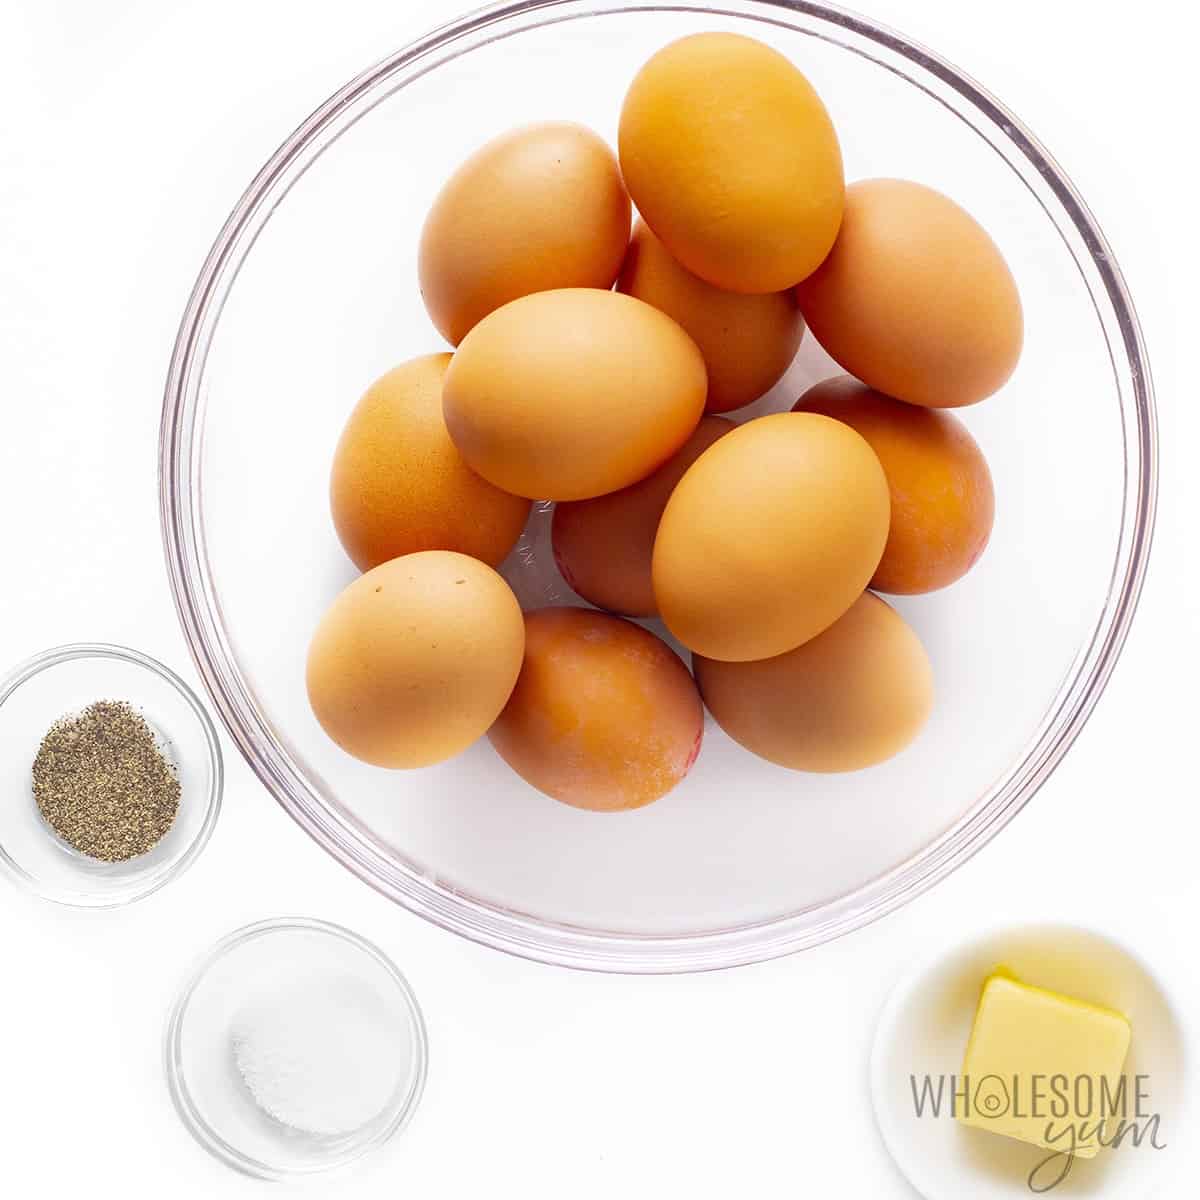 Ingredients to make basic baked eggs.